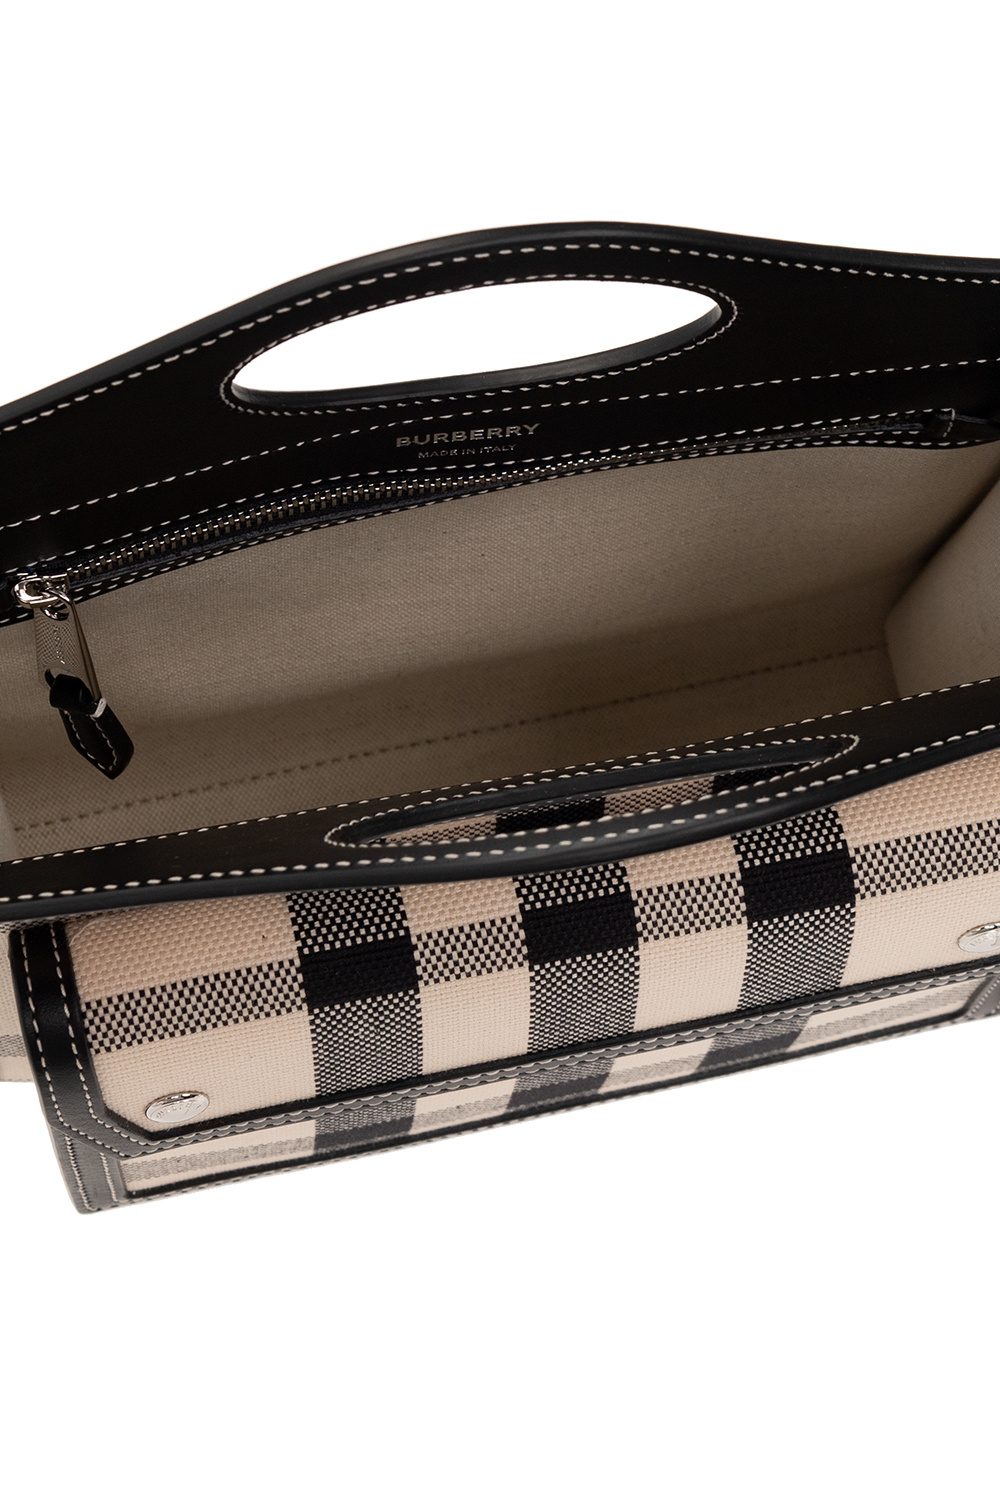 Burberry ‘Pocket Mini’ shopper bag